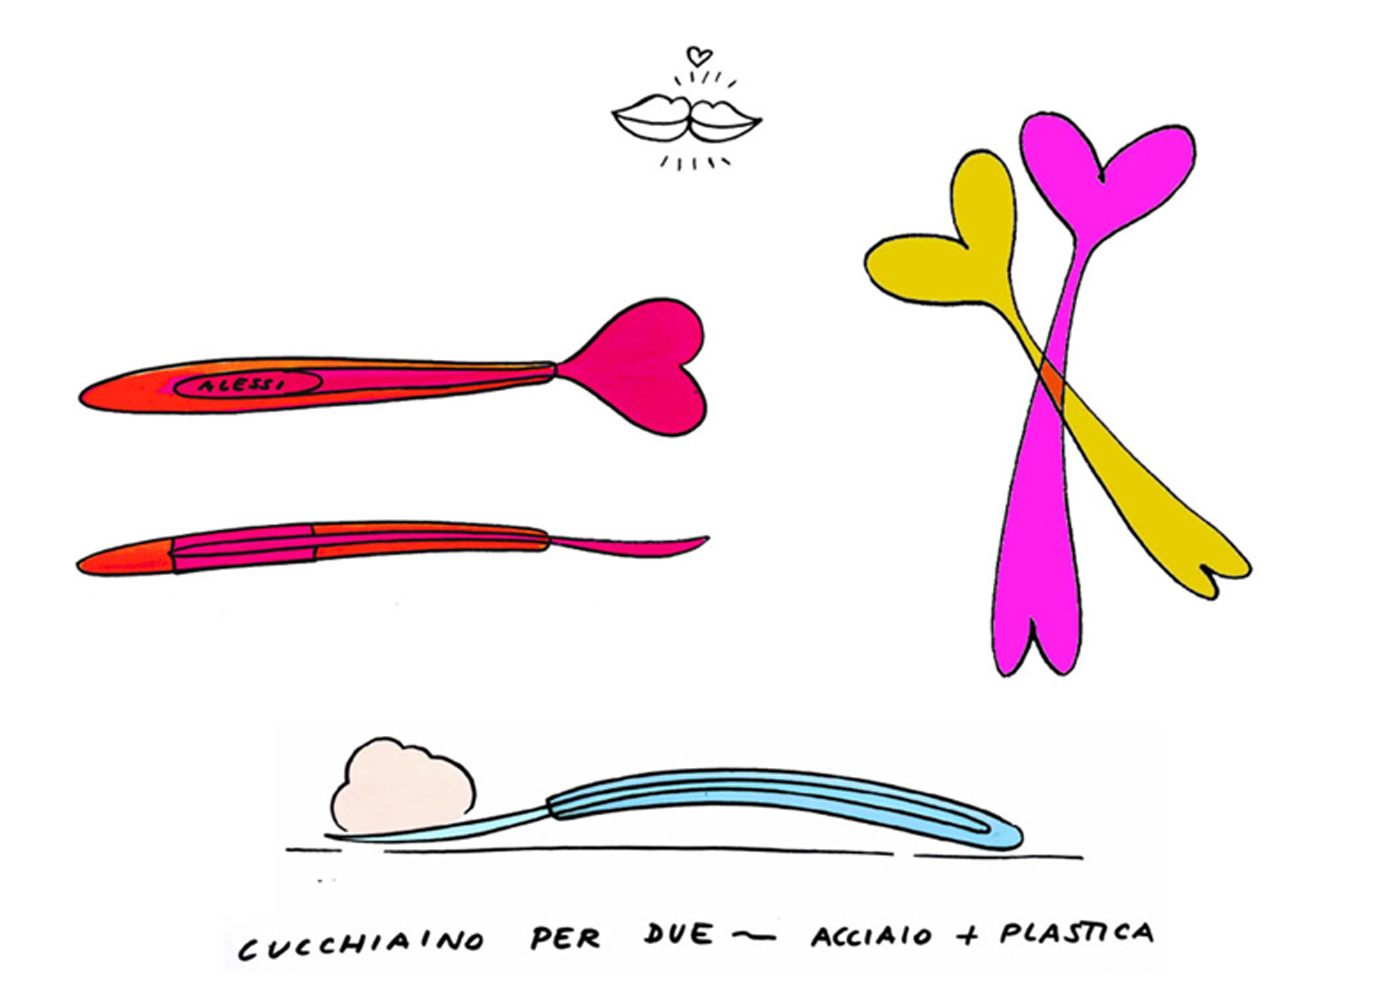 ice cream spoon project drawing cucchiaino per due design Miriam Mirri - Alessi prod.
